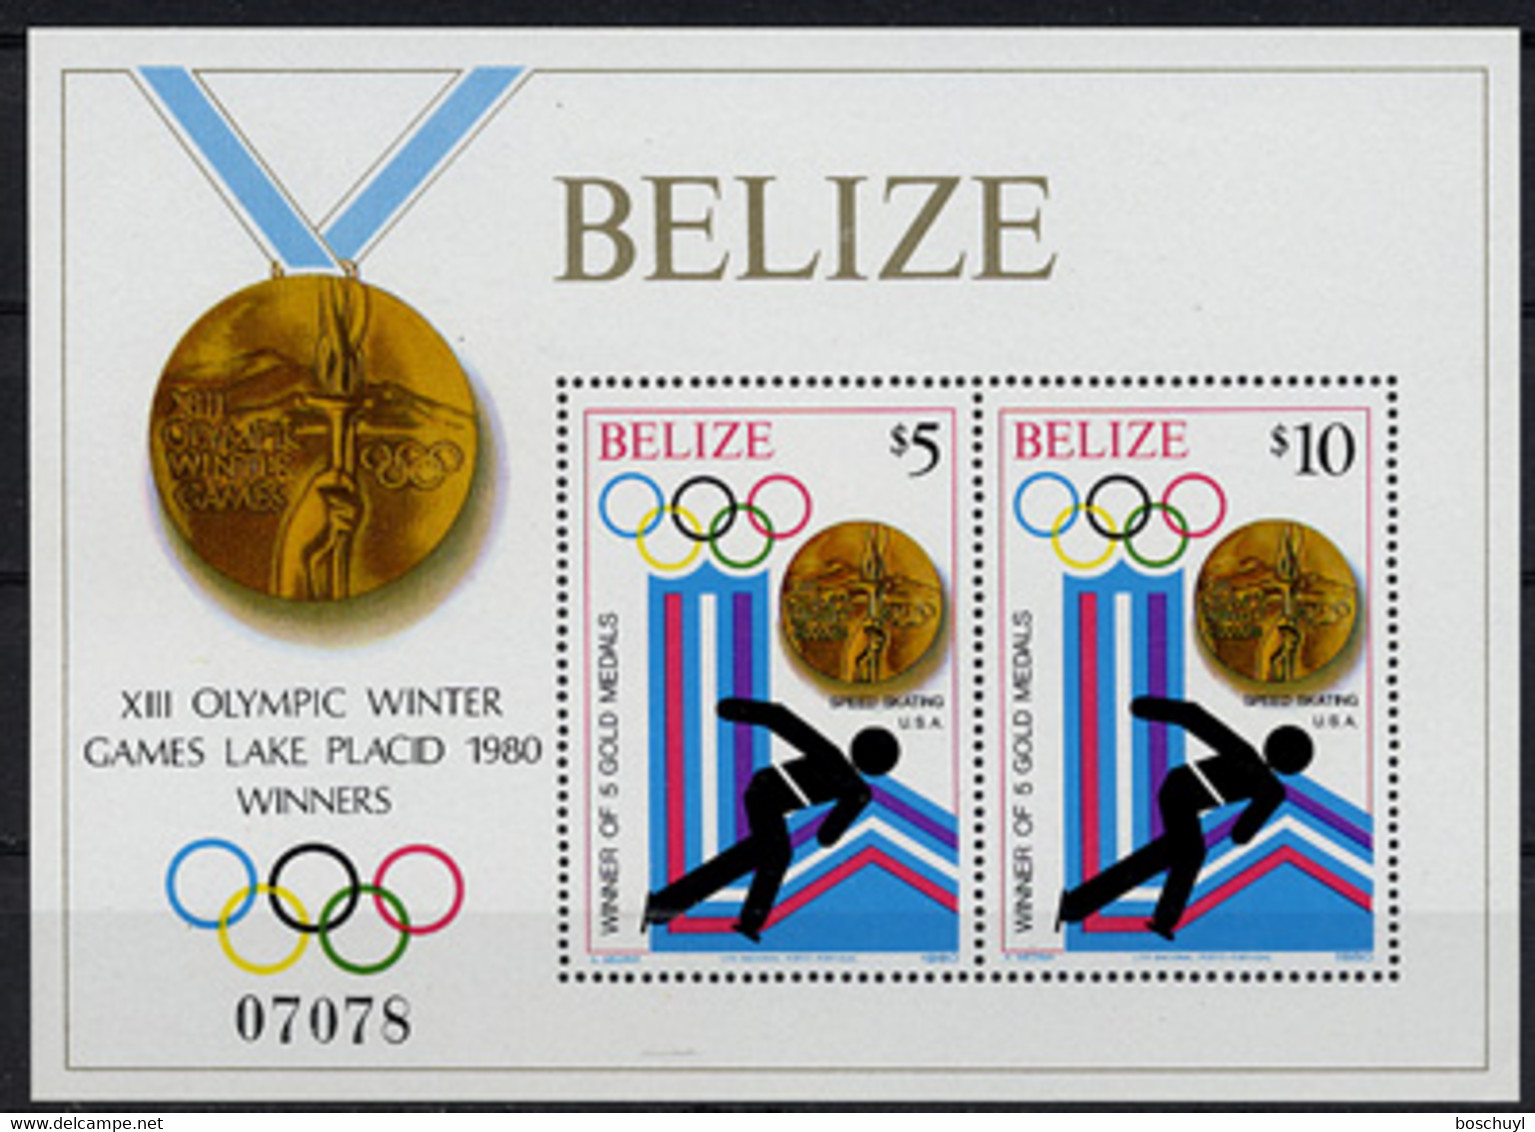 Belize, 1980, Olympic Winter Games Lake Placid, Speed Skating, Sports, Medals, MNH, Michel Block 20 - Belize (1973-...)